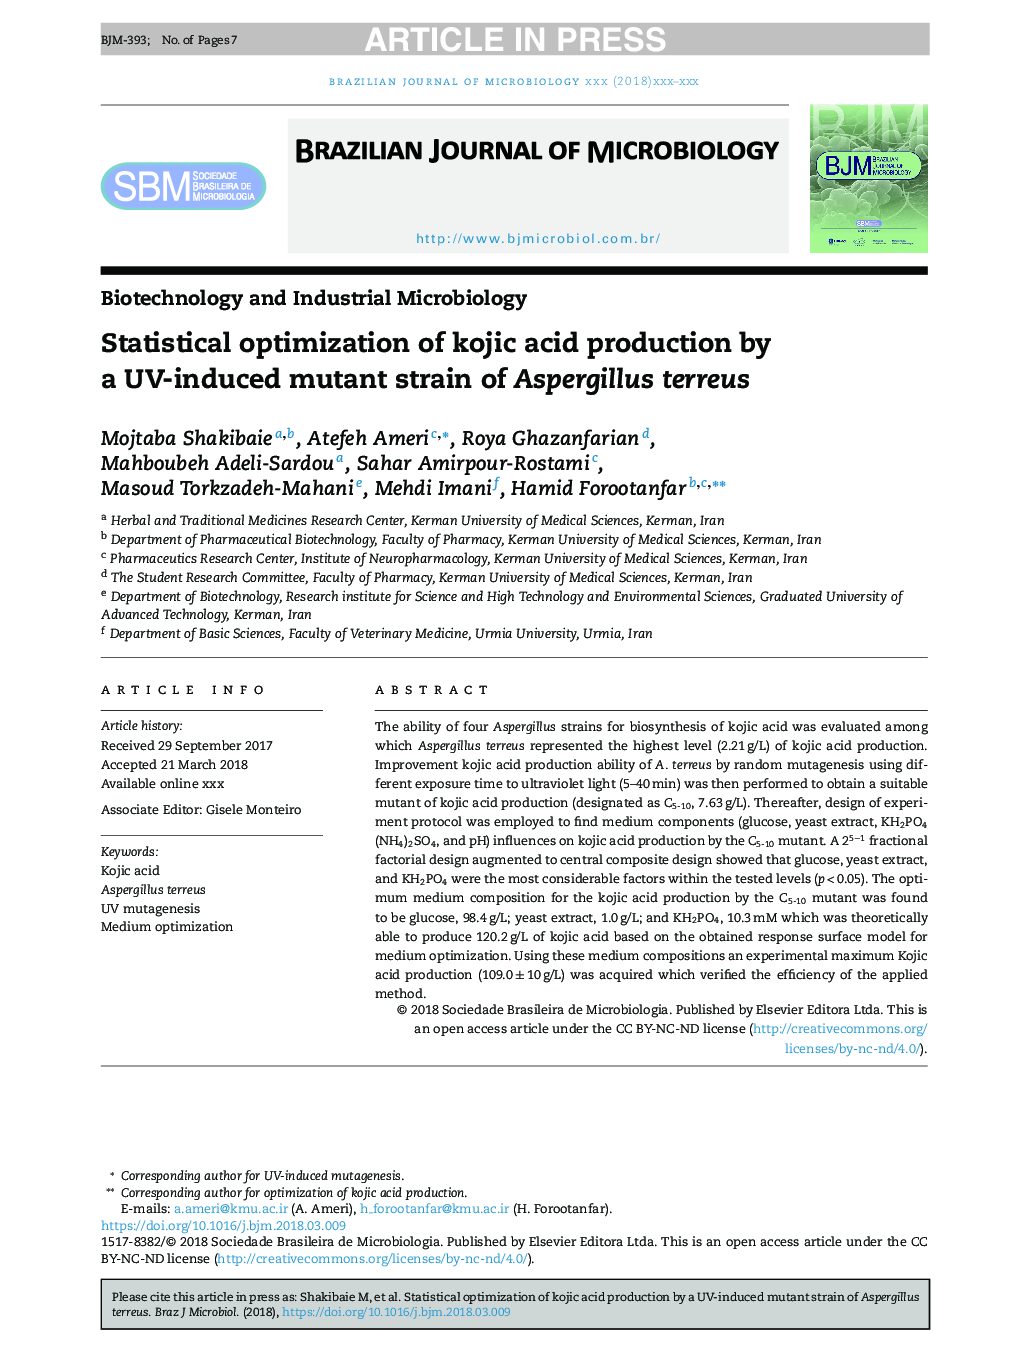 Statistical optimization of kojic acid production by a UV-induced mutant strain of Aspergillus terreus